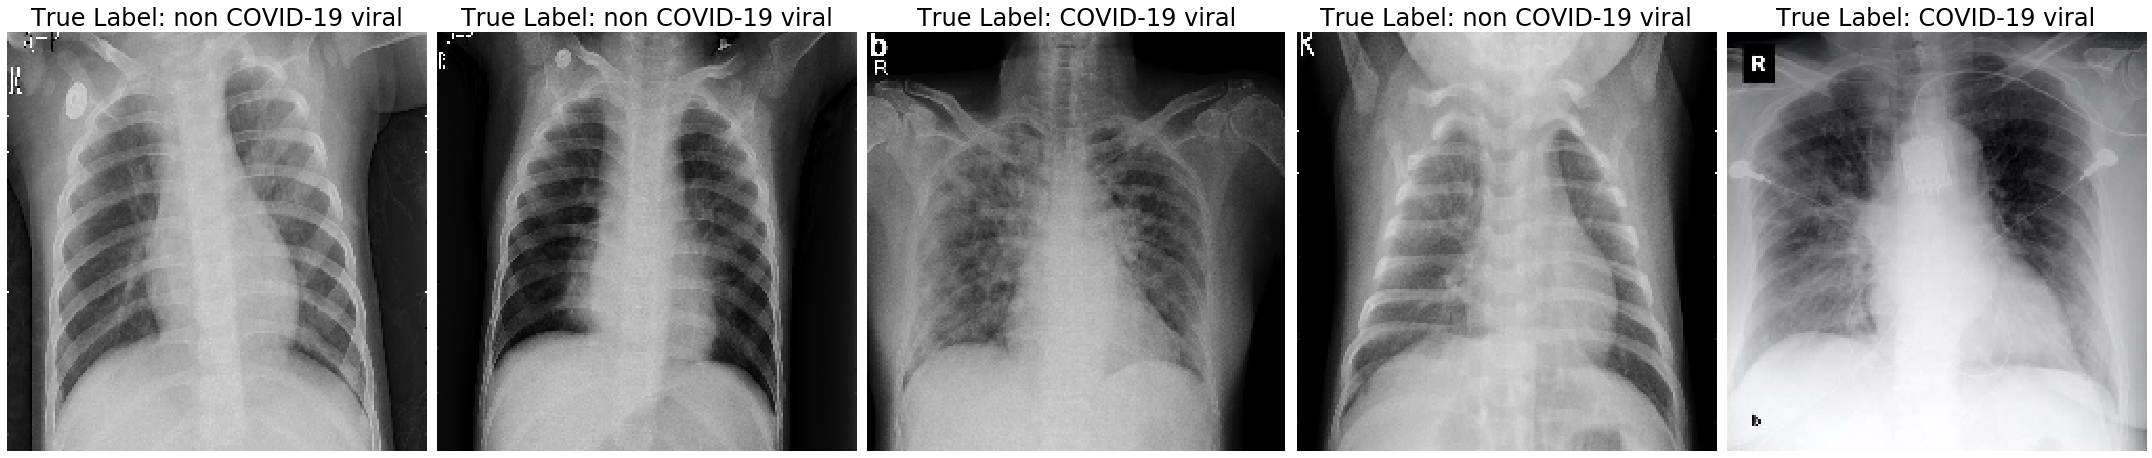 Sample Chest X-rays